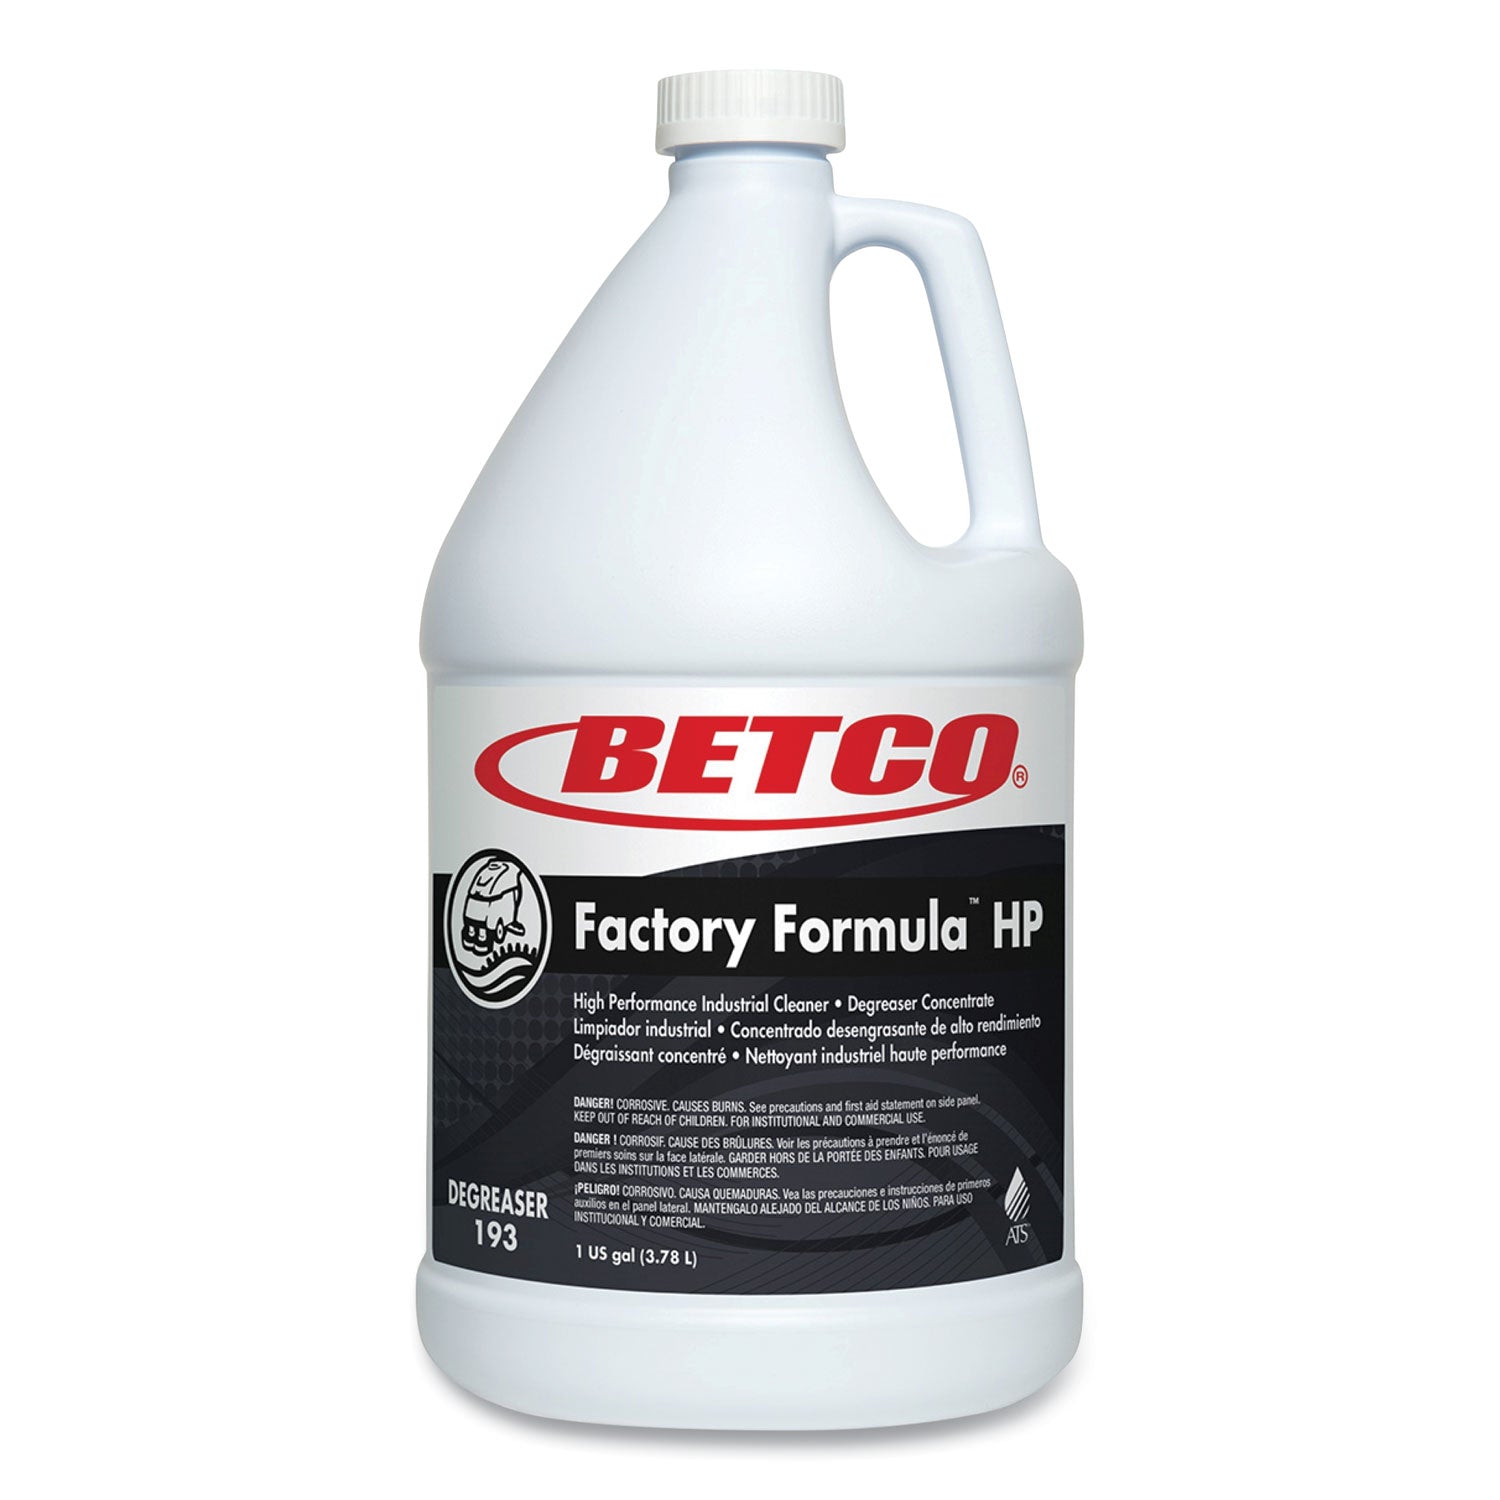 factory-formula-hp-cleaner-degreaser-1-gal-bottle-4-carton_bet1930400 - 1